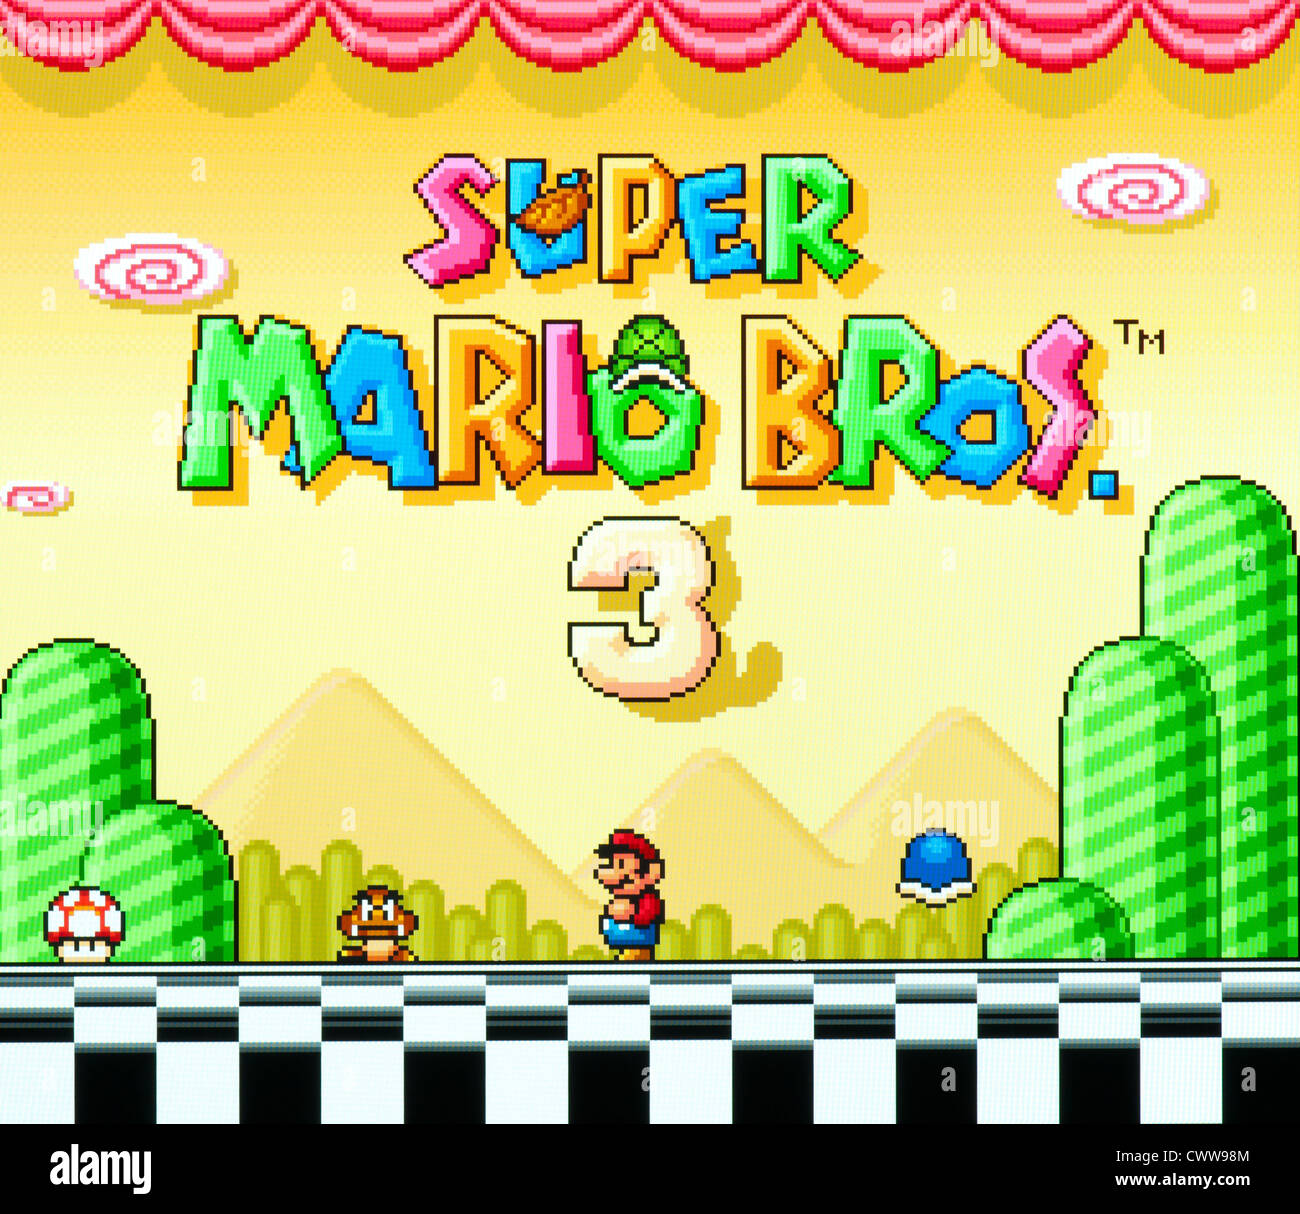 Super Mario bros 3 - title screen Stock Photo